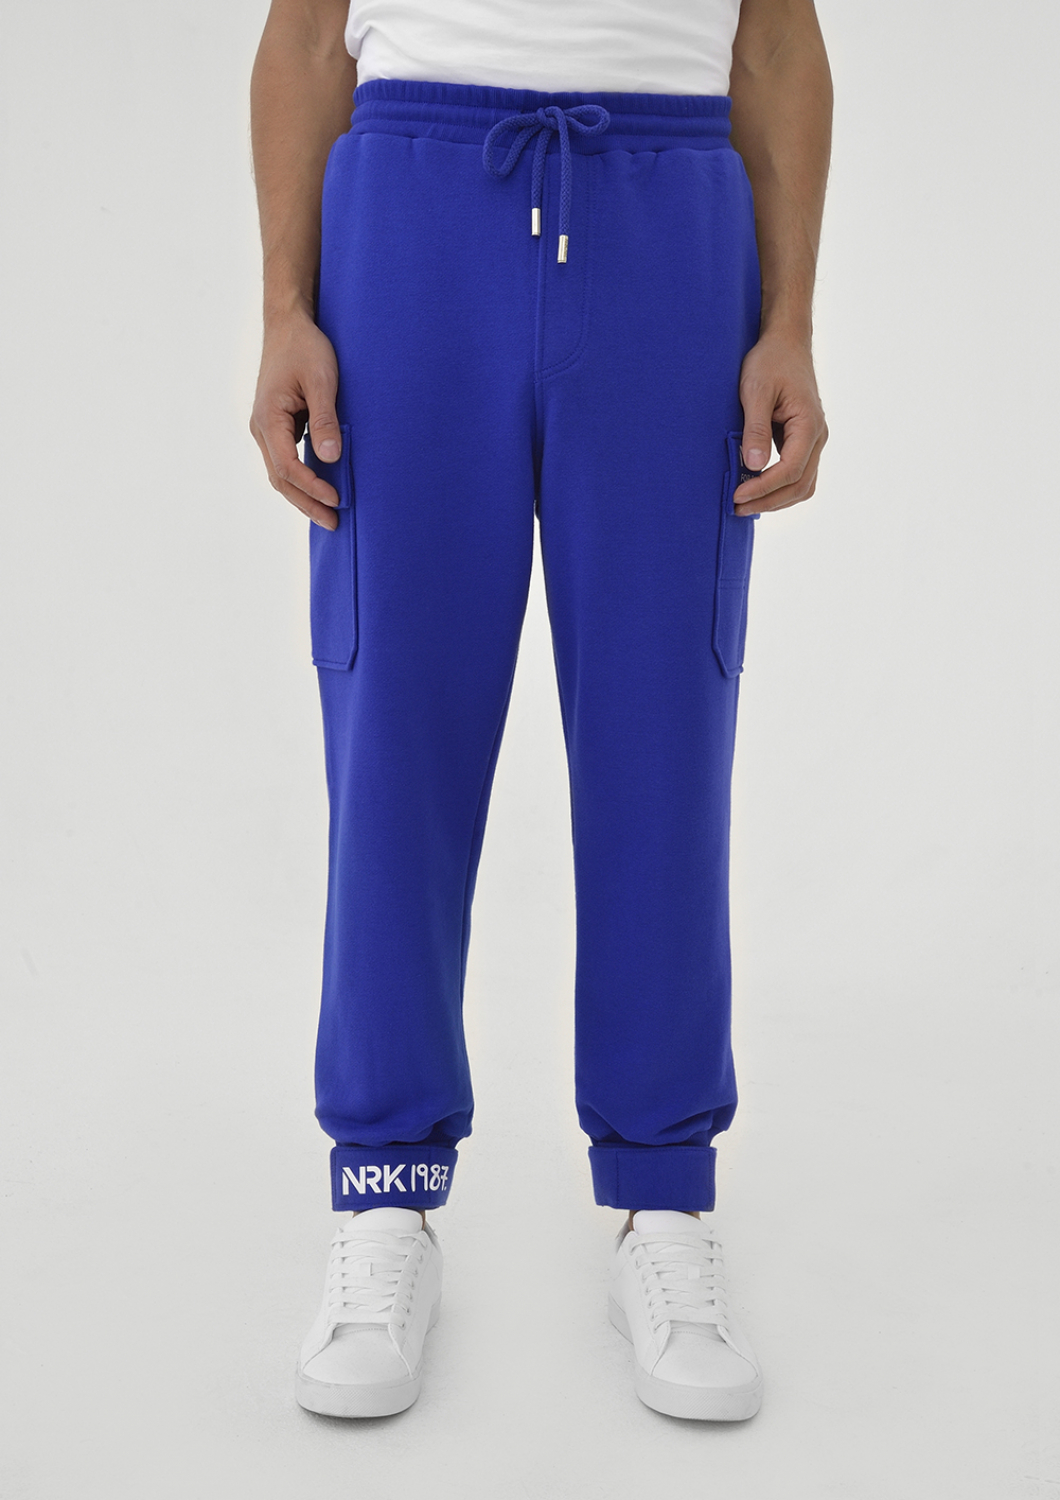 Худи и спортивные брюки Pockets. Cornflower Blue. Male.